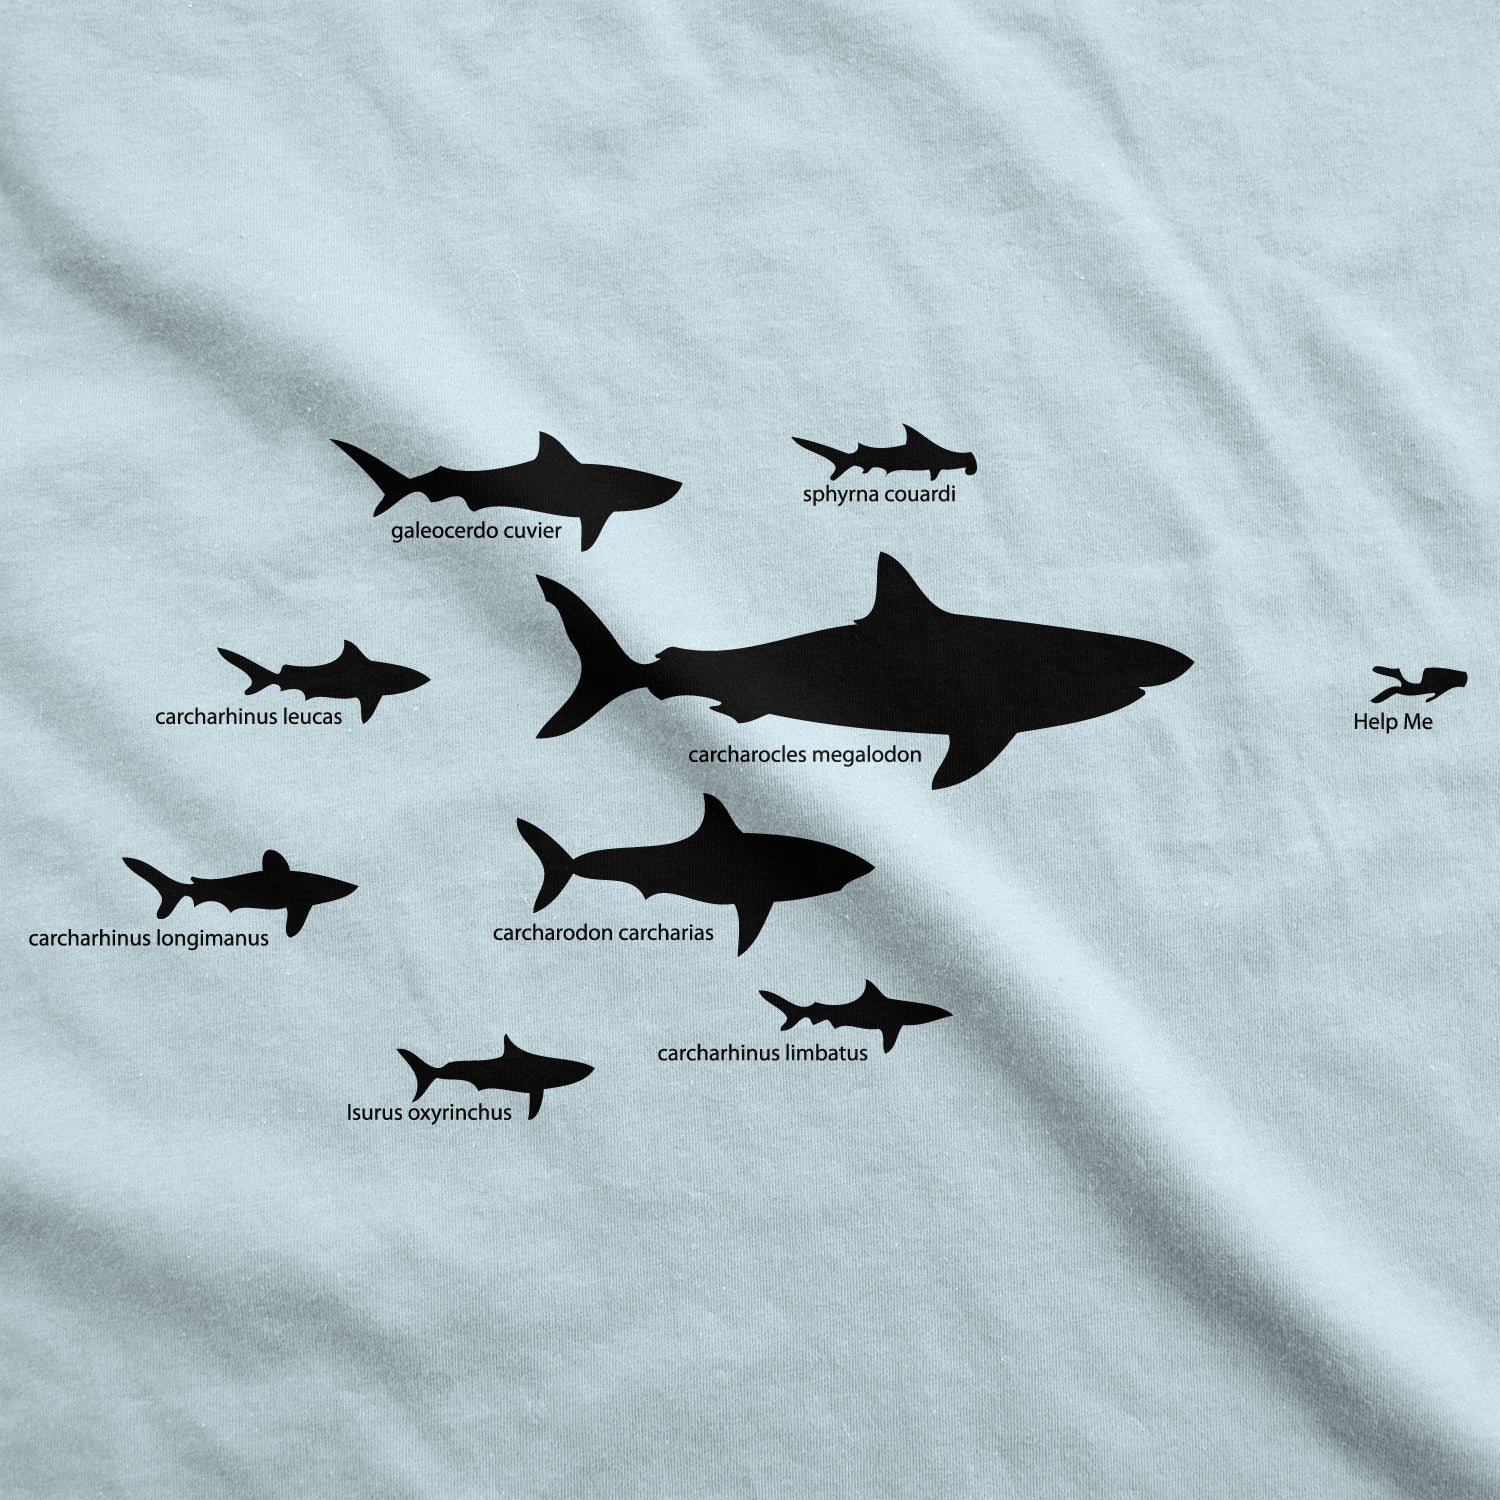 Funny Light Heather Blue - Shark Hierarchy Shark Hierarchy Mens T Shirt Nerdy Shark Week Science Tee